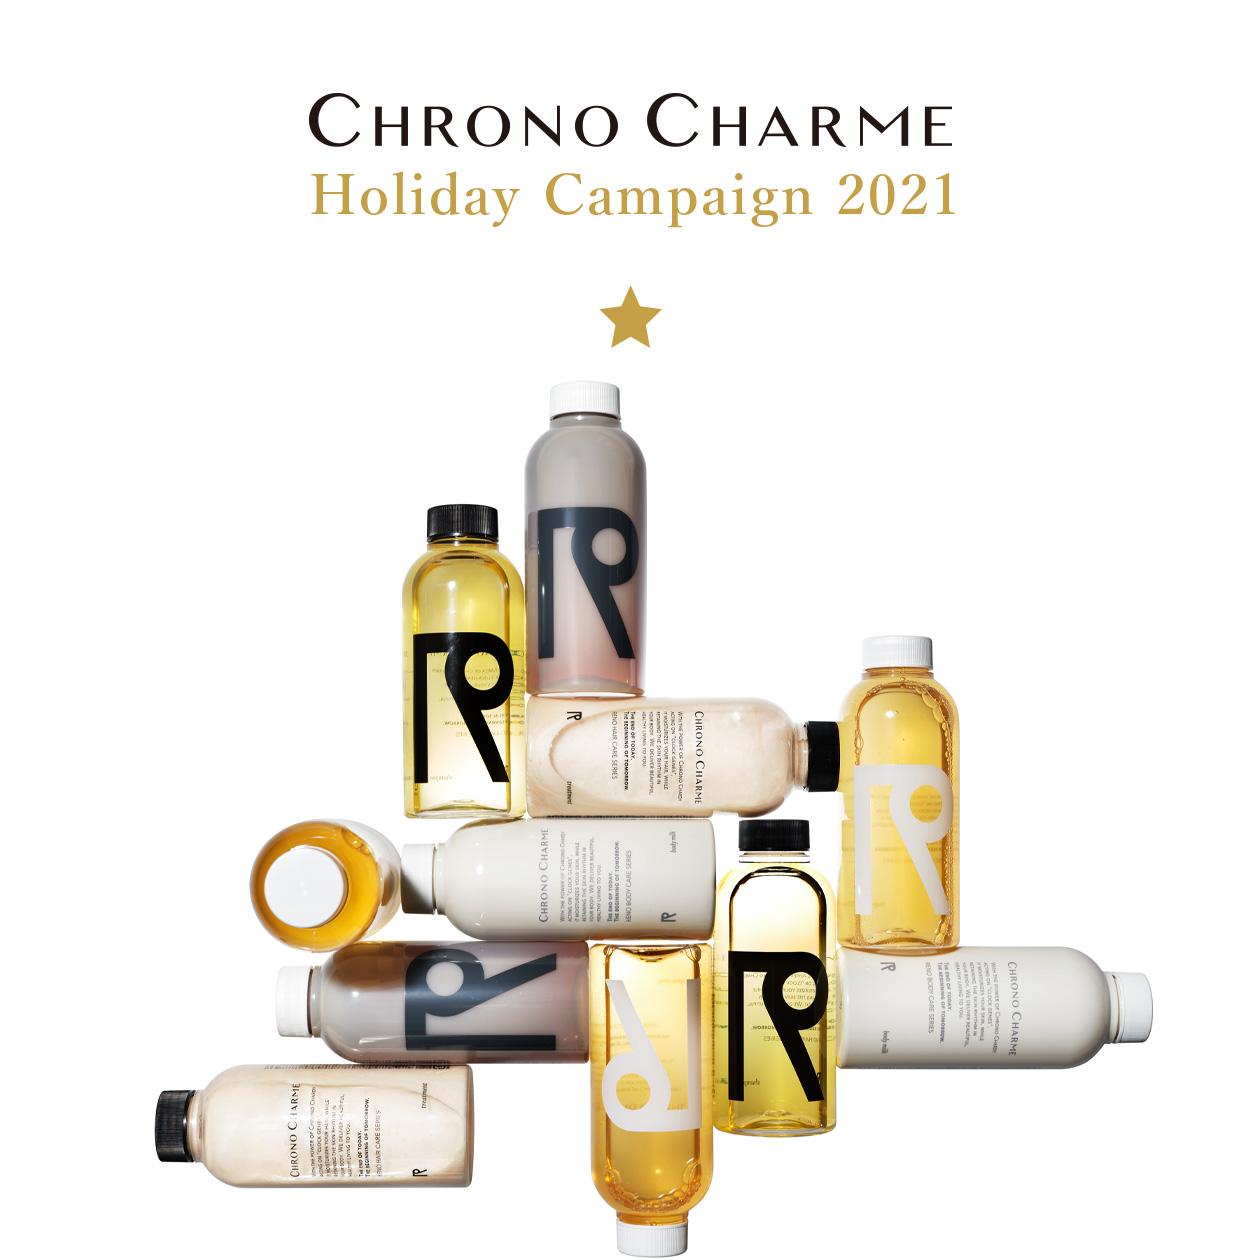 CHRONO CHARME holiday campaign 2021